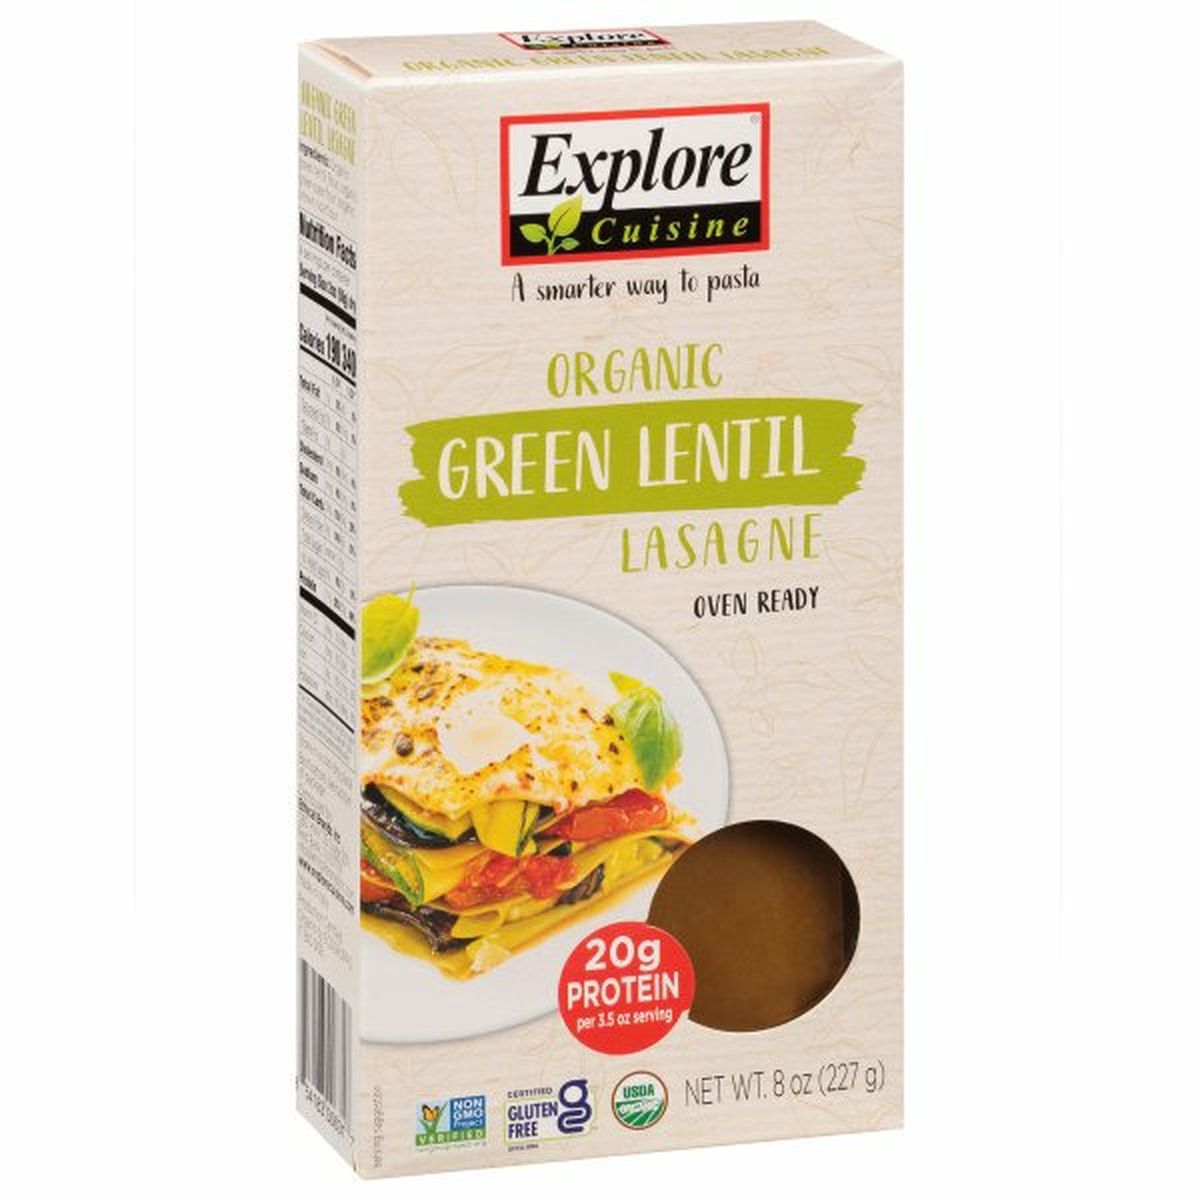 Calories in Explore Cuisine Lasagne, Organic, Green Lentil